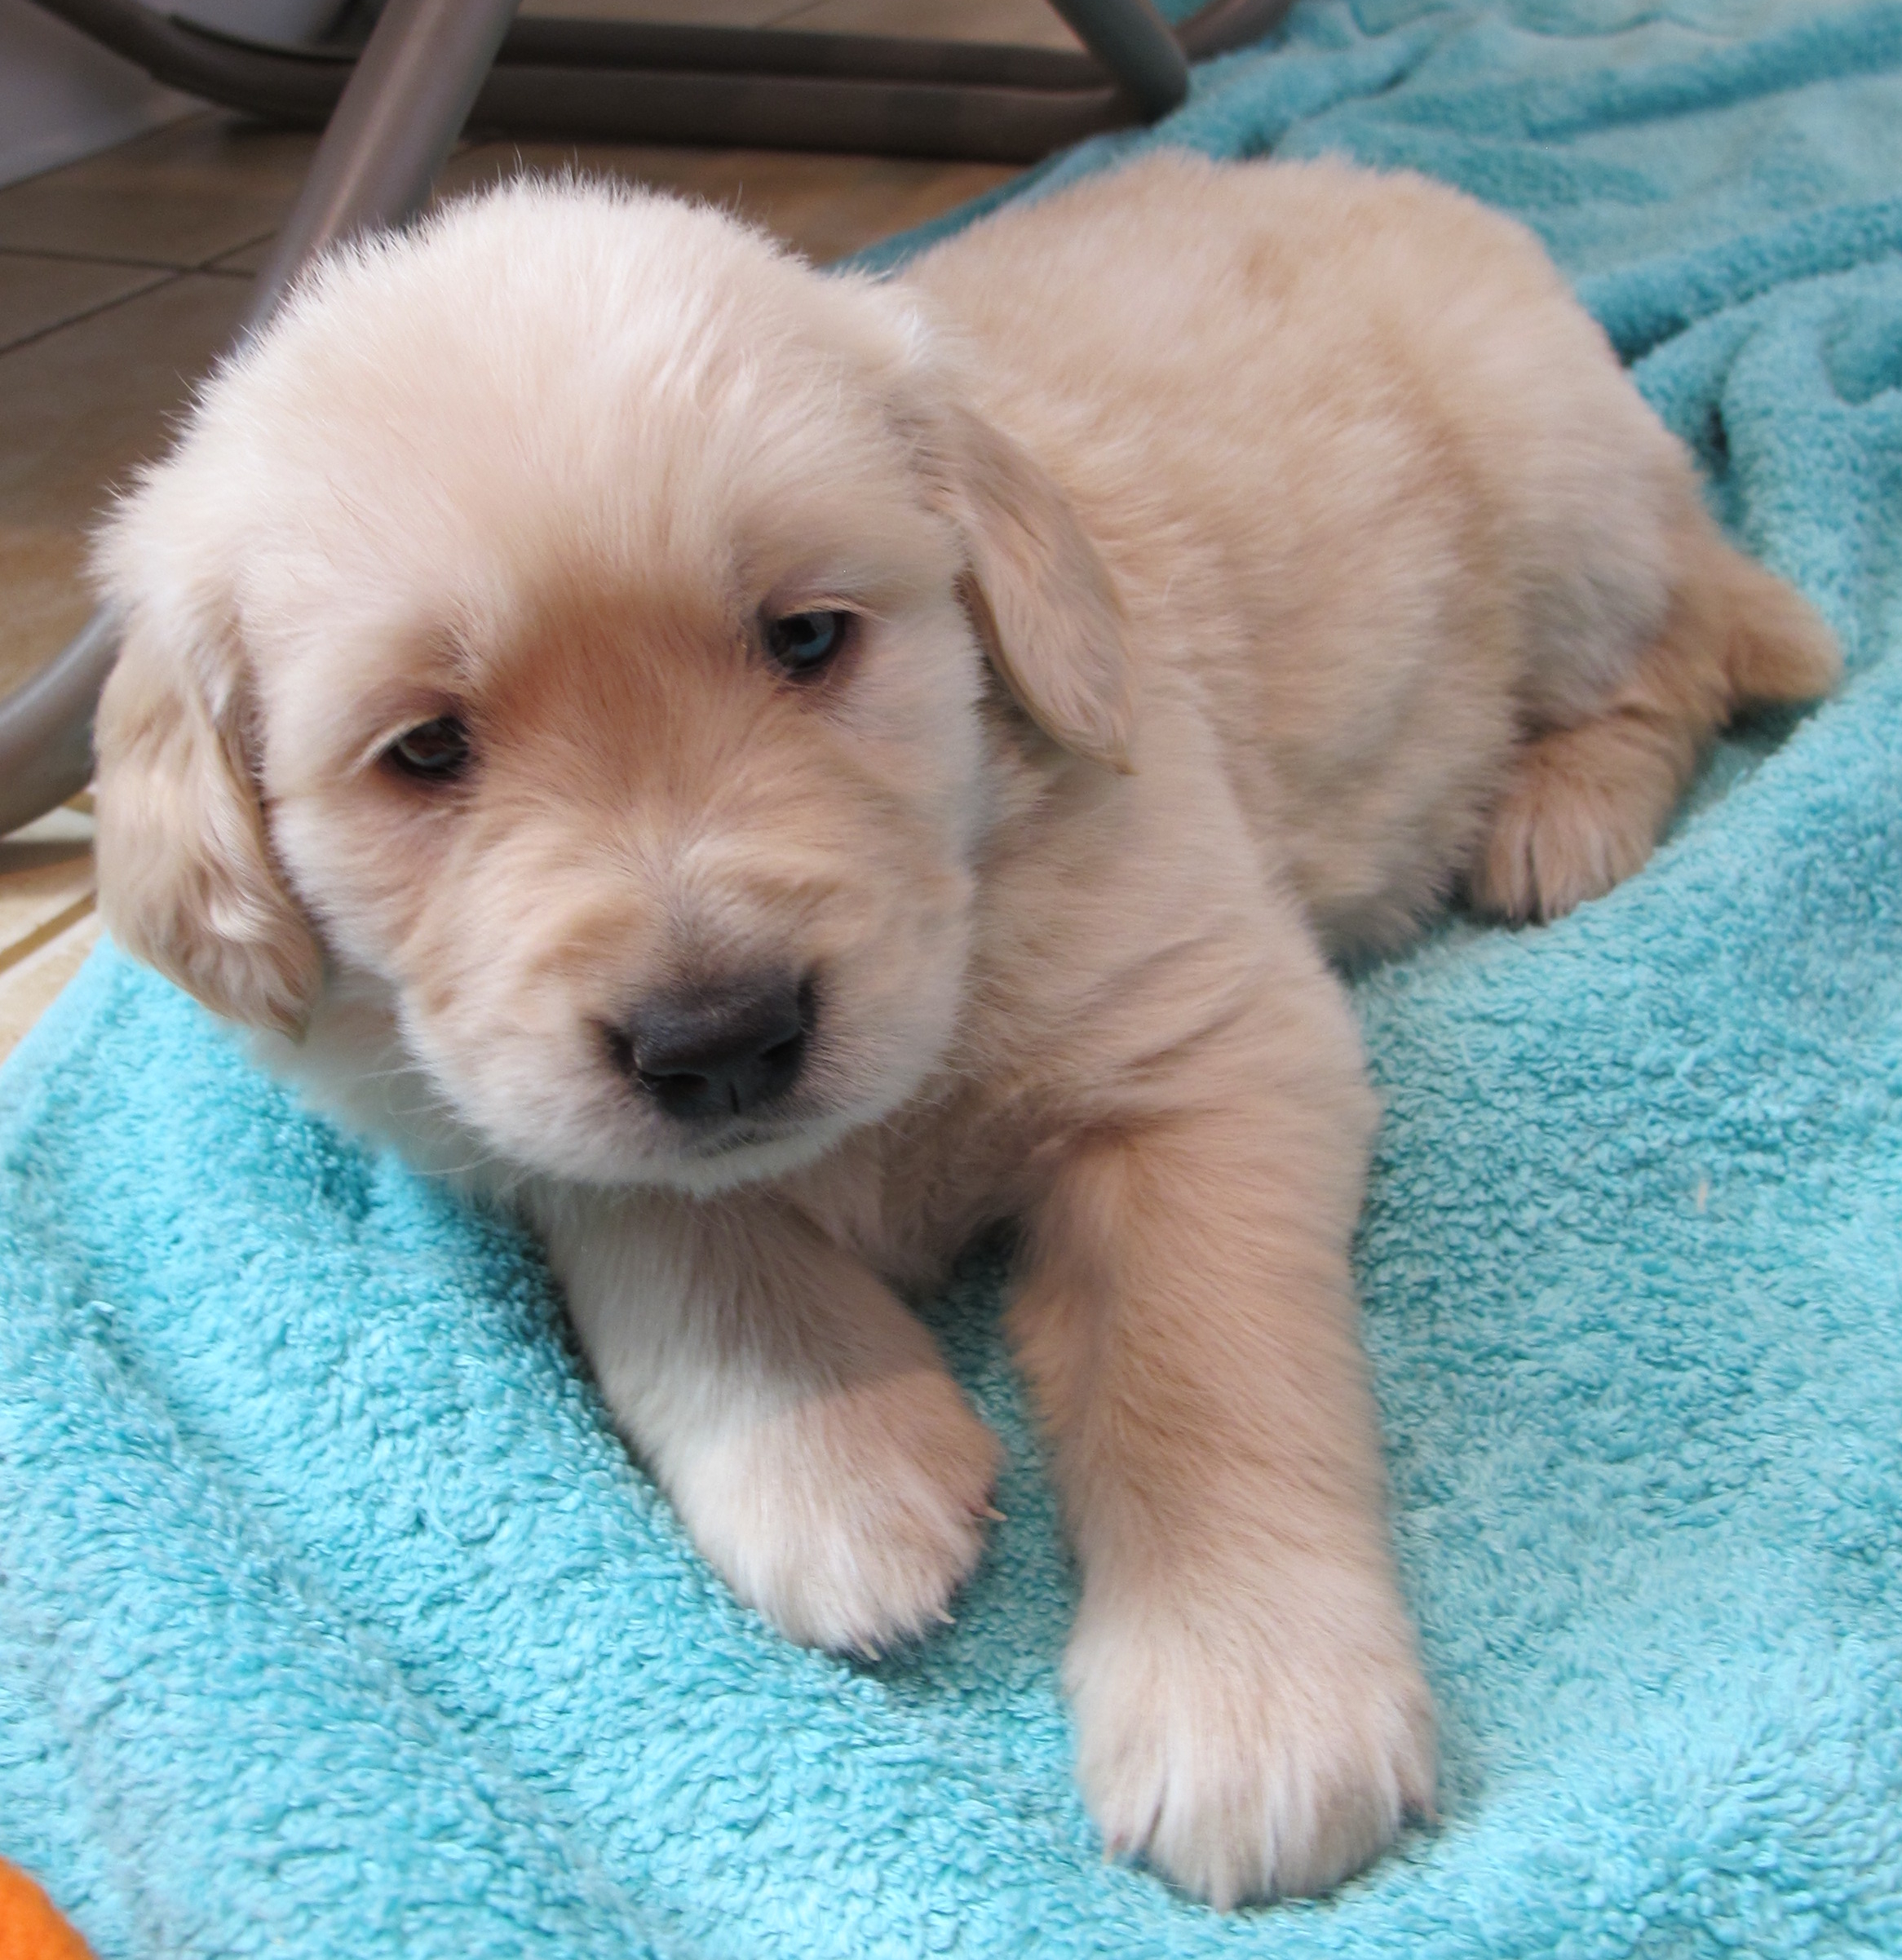 Файл:5-week-old Golden Retriever puppy.jpg - Уикипедия